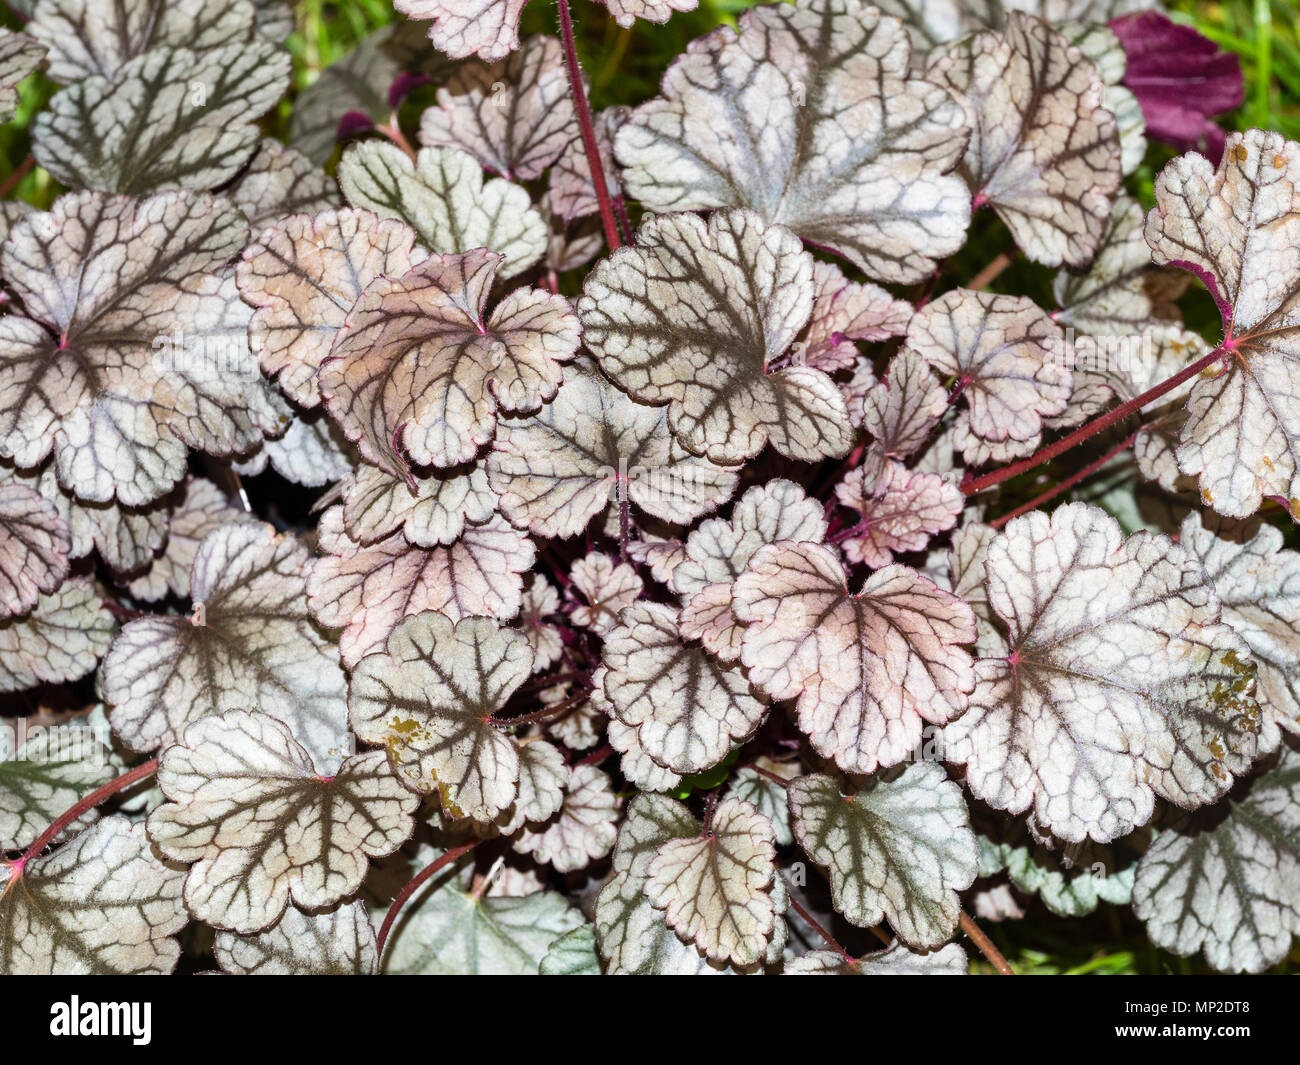 Black veined silvery leaves of the ornamental hardy everhreen perennial, Heuchera 'Sugar Frosting' Stock Photo